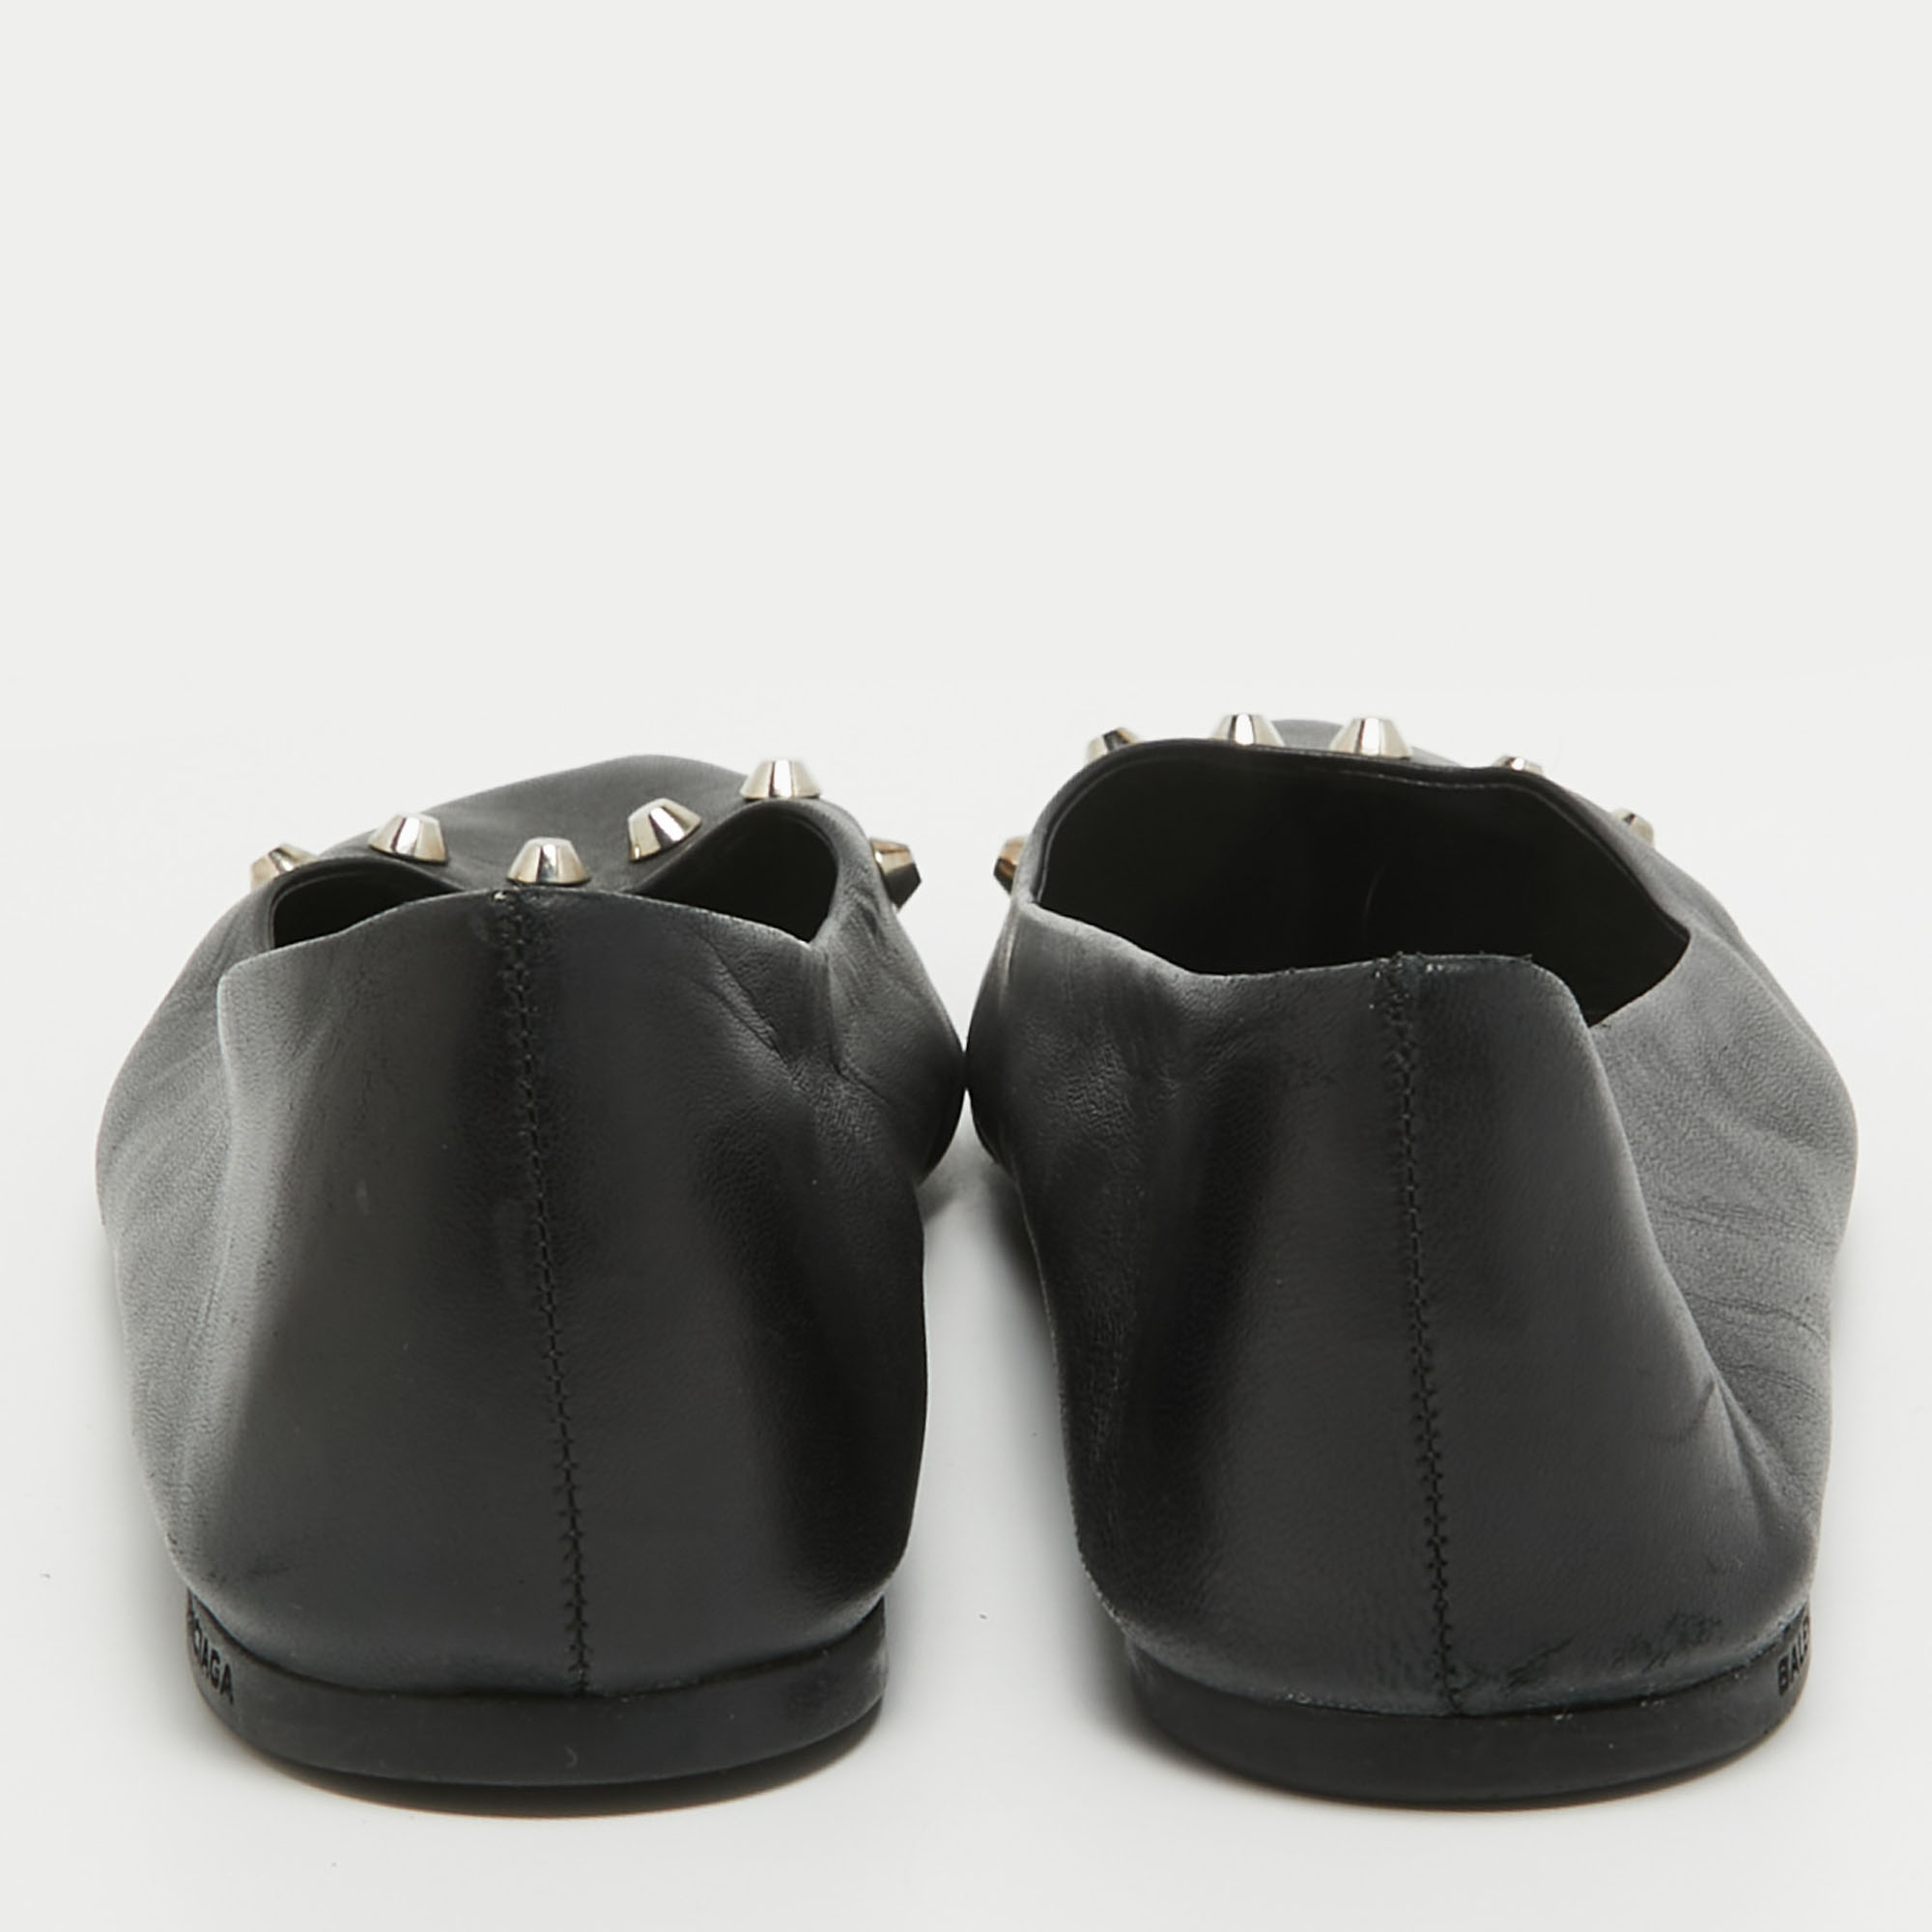 Balenciaga Black Leather Studded Ballet Flats Size 40